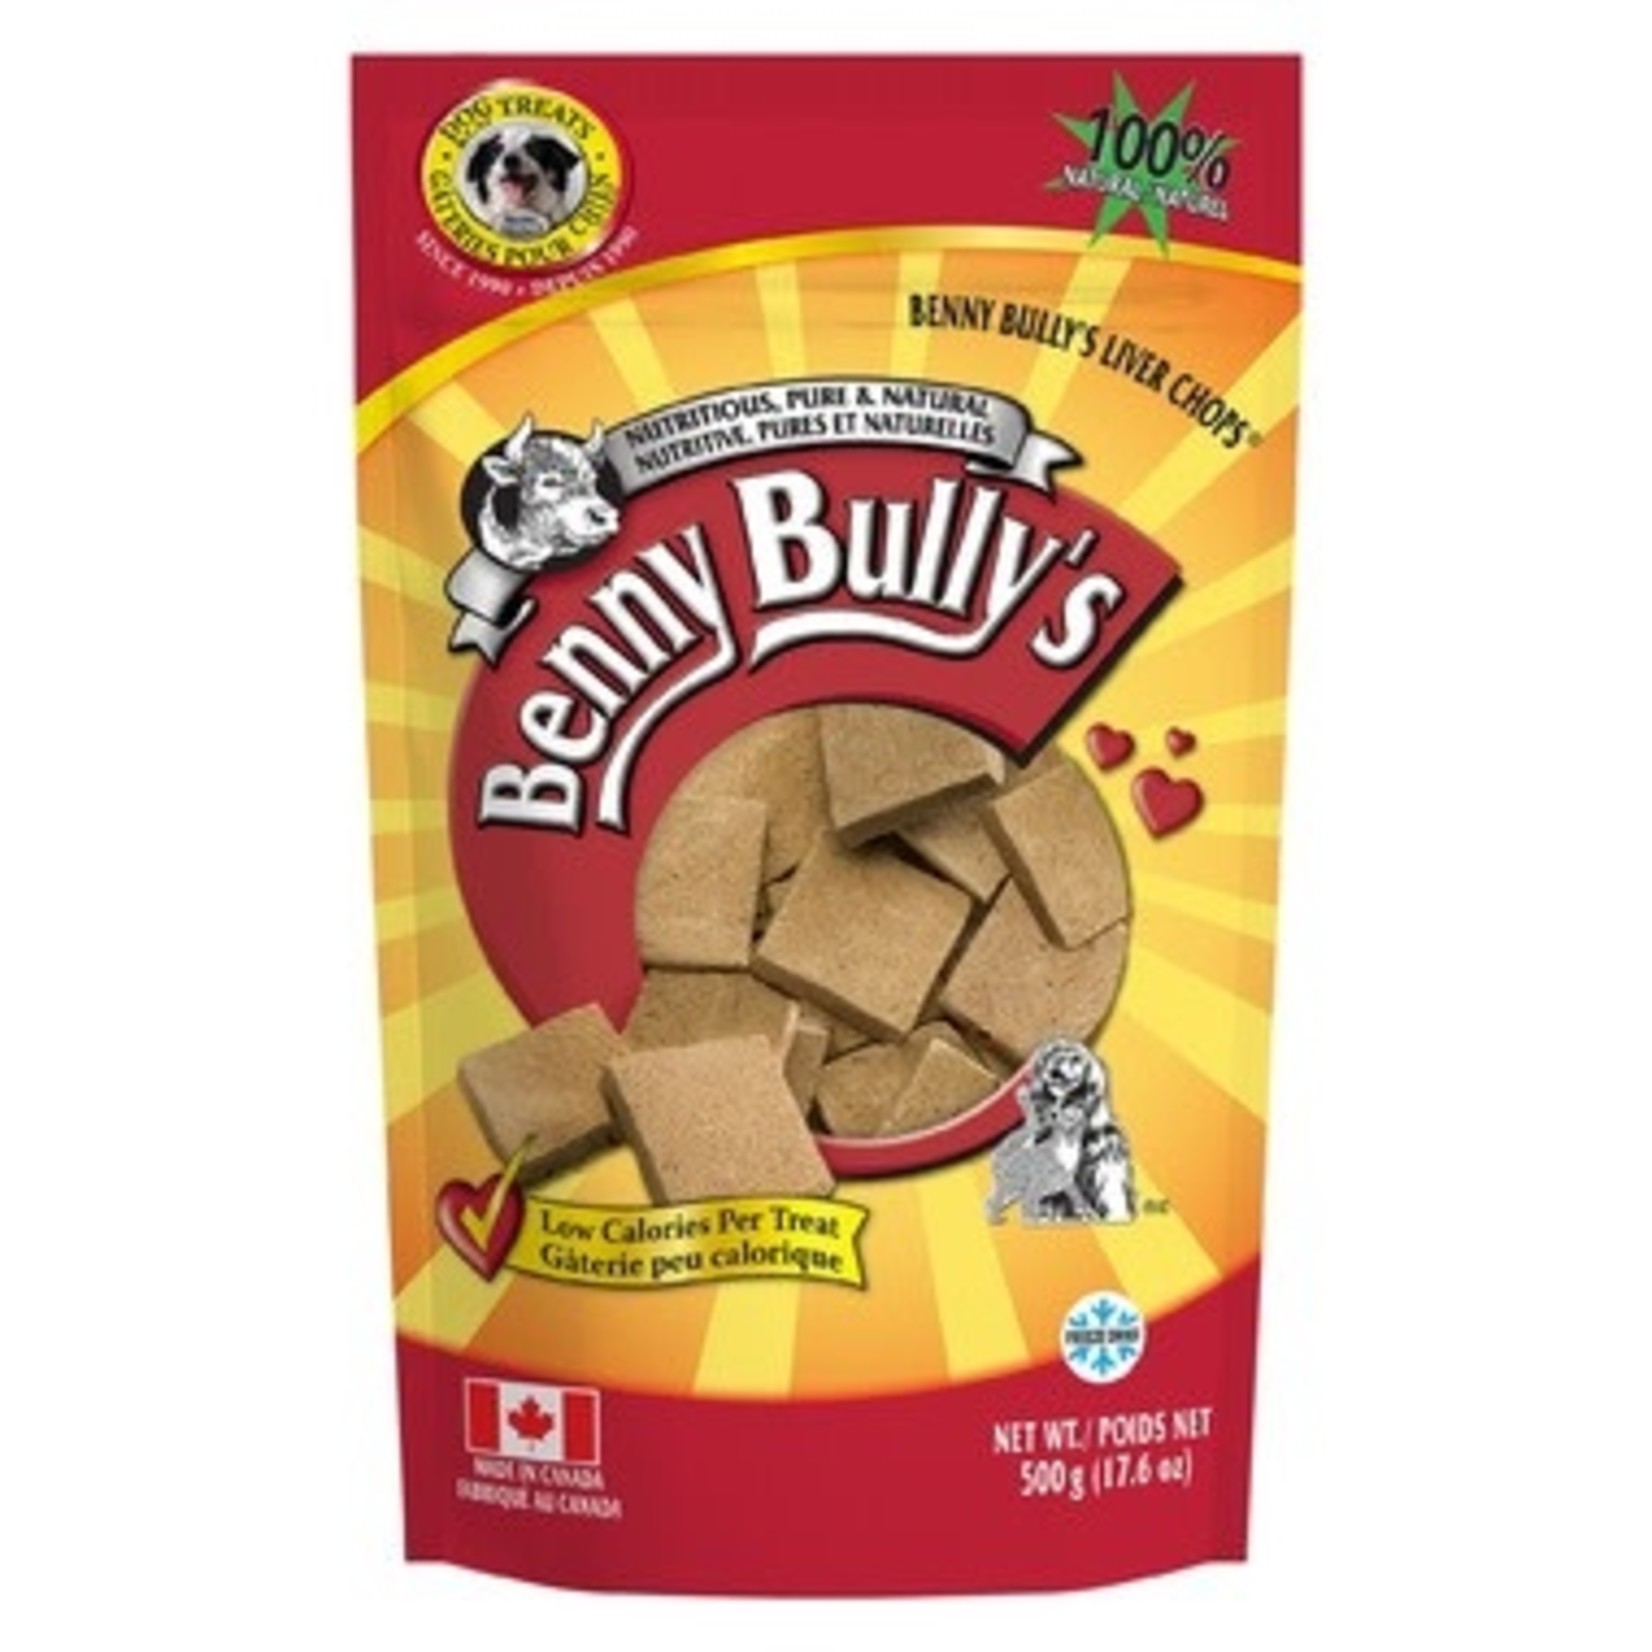 BENNY BULLY'S (W) Benny Bully's Liver Chops Original 500g